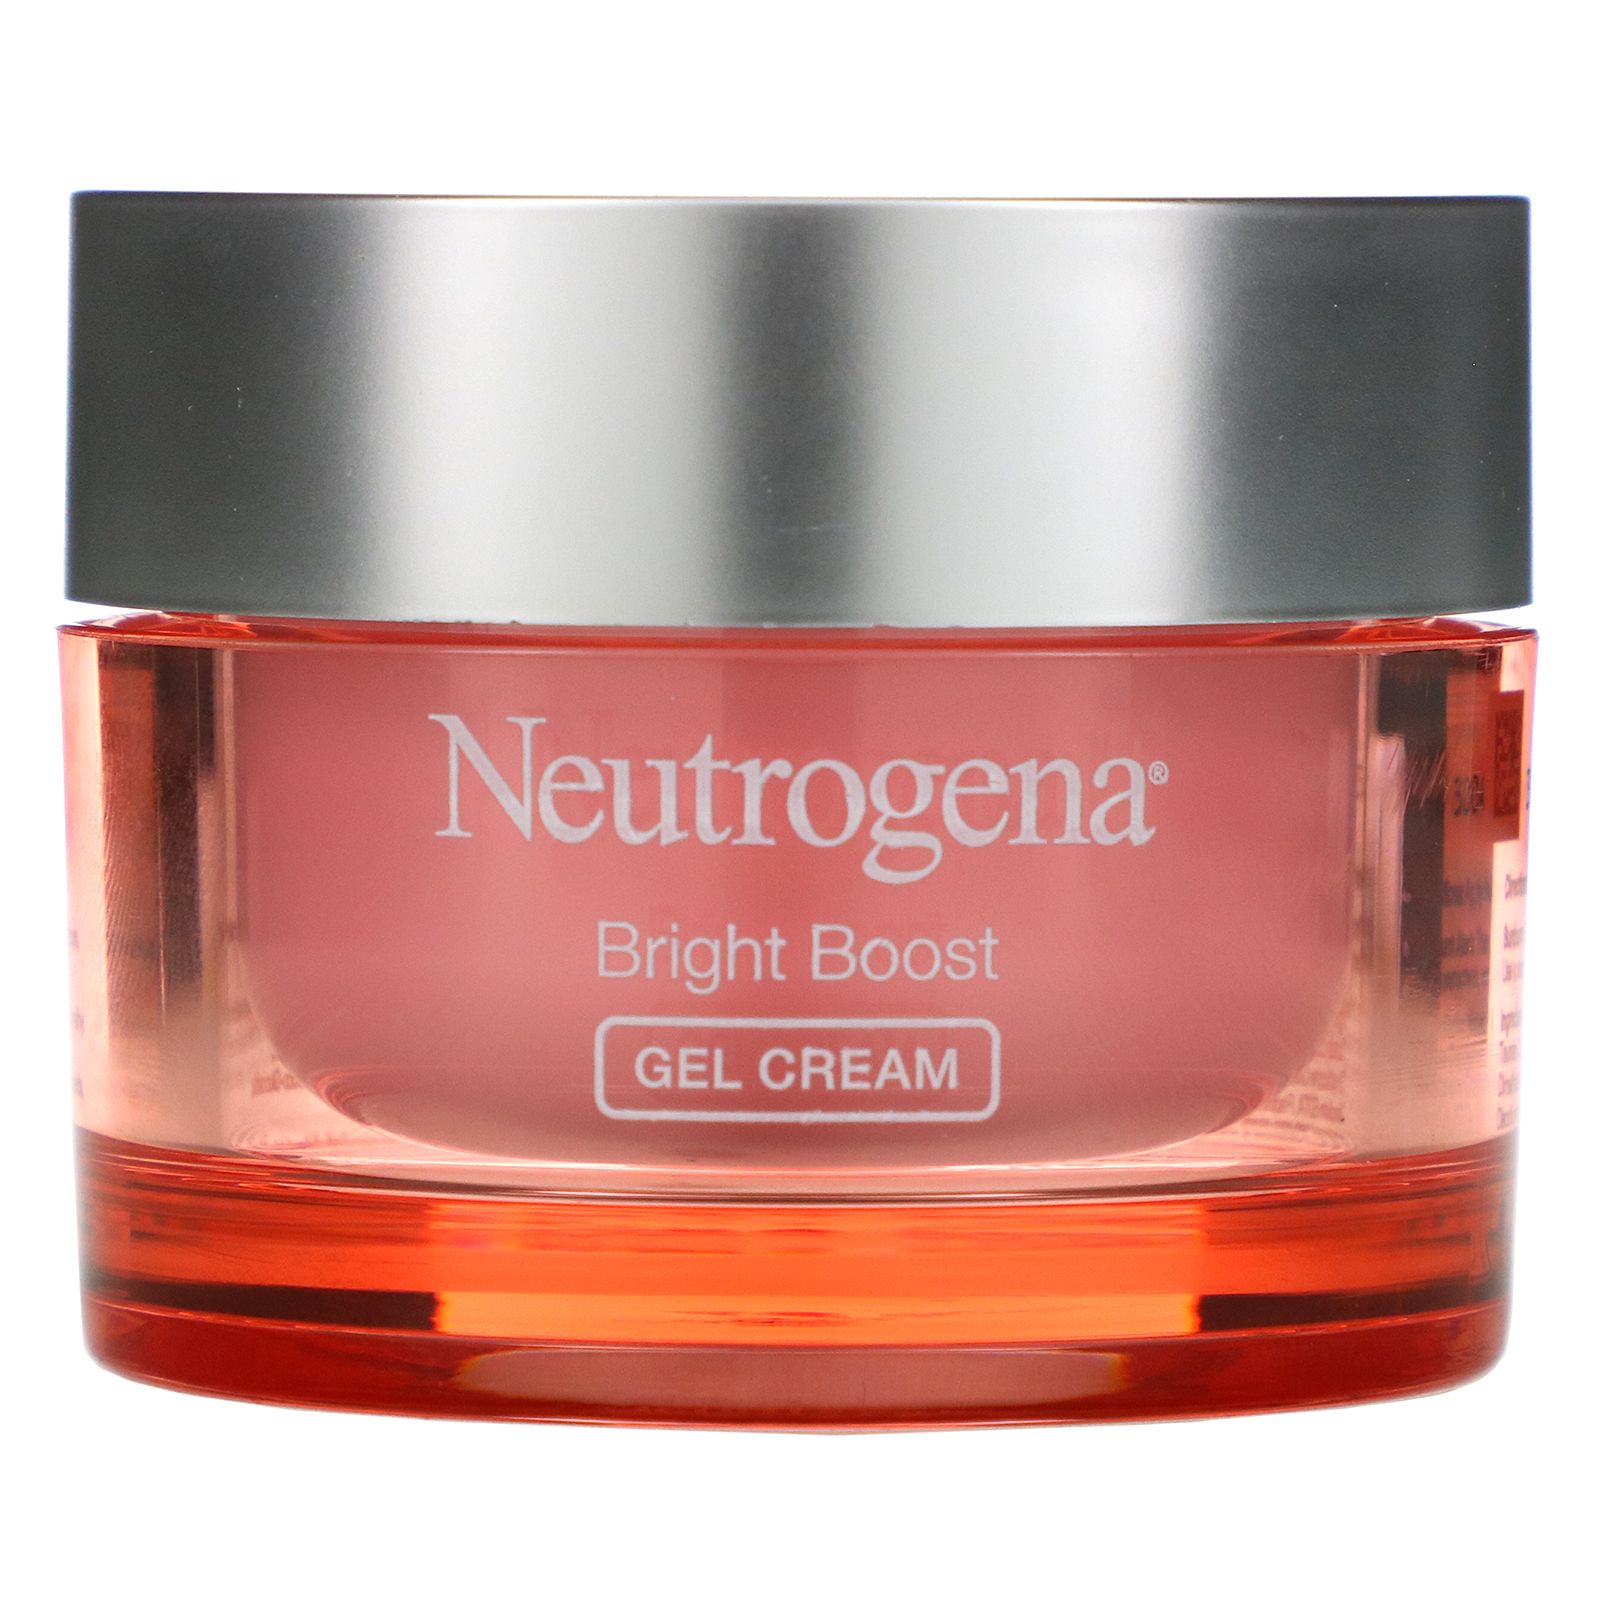 Gel neutrogena. Neutrogena Bright Boost Gel. Neutrogena Gel Cream. Neutrogena Gel Cream Bright Boost крем, 50 мл. Neutrogena Bright Boost пилинг.